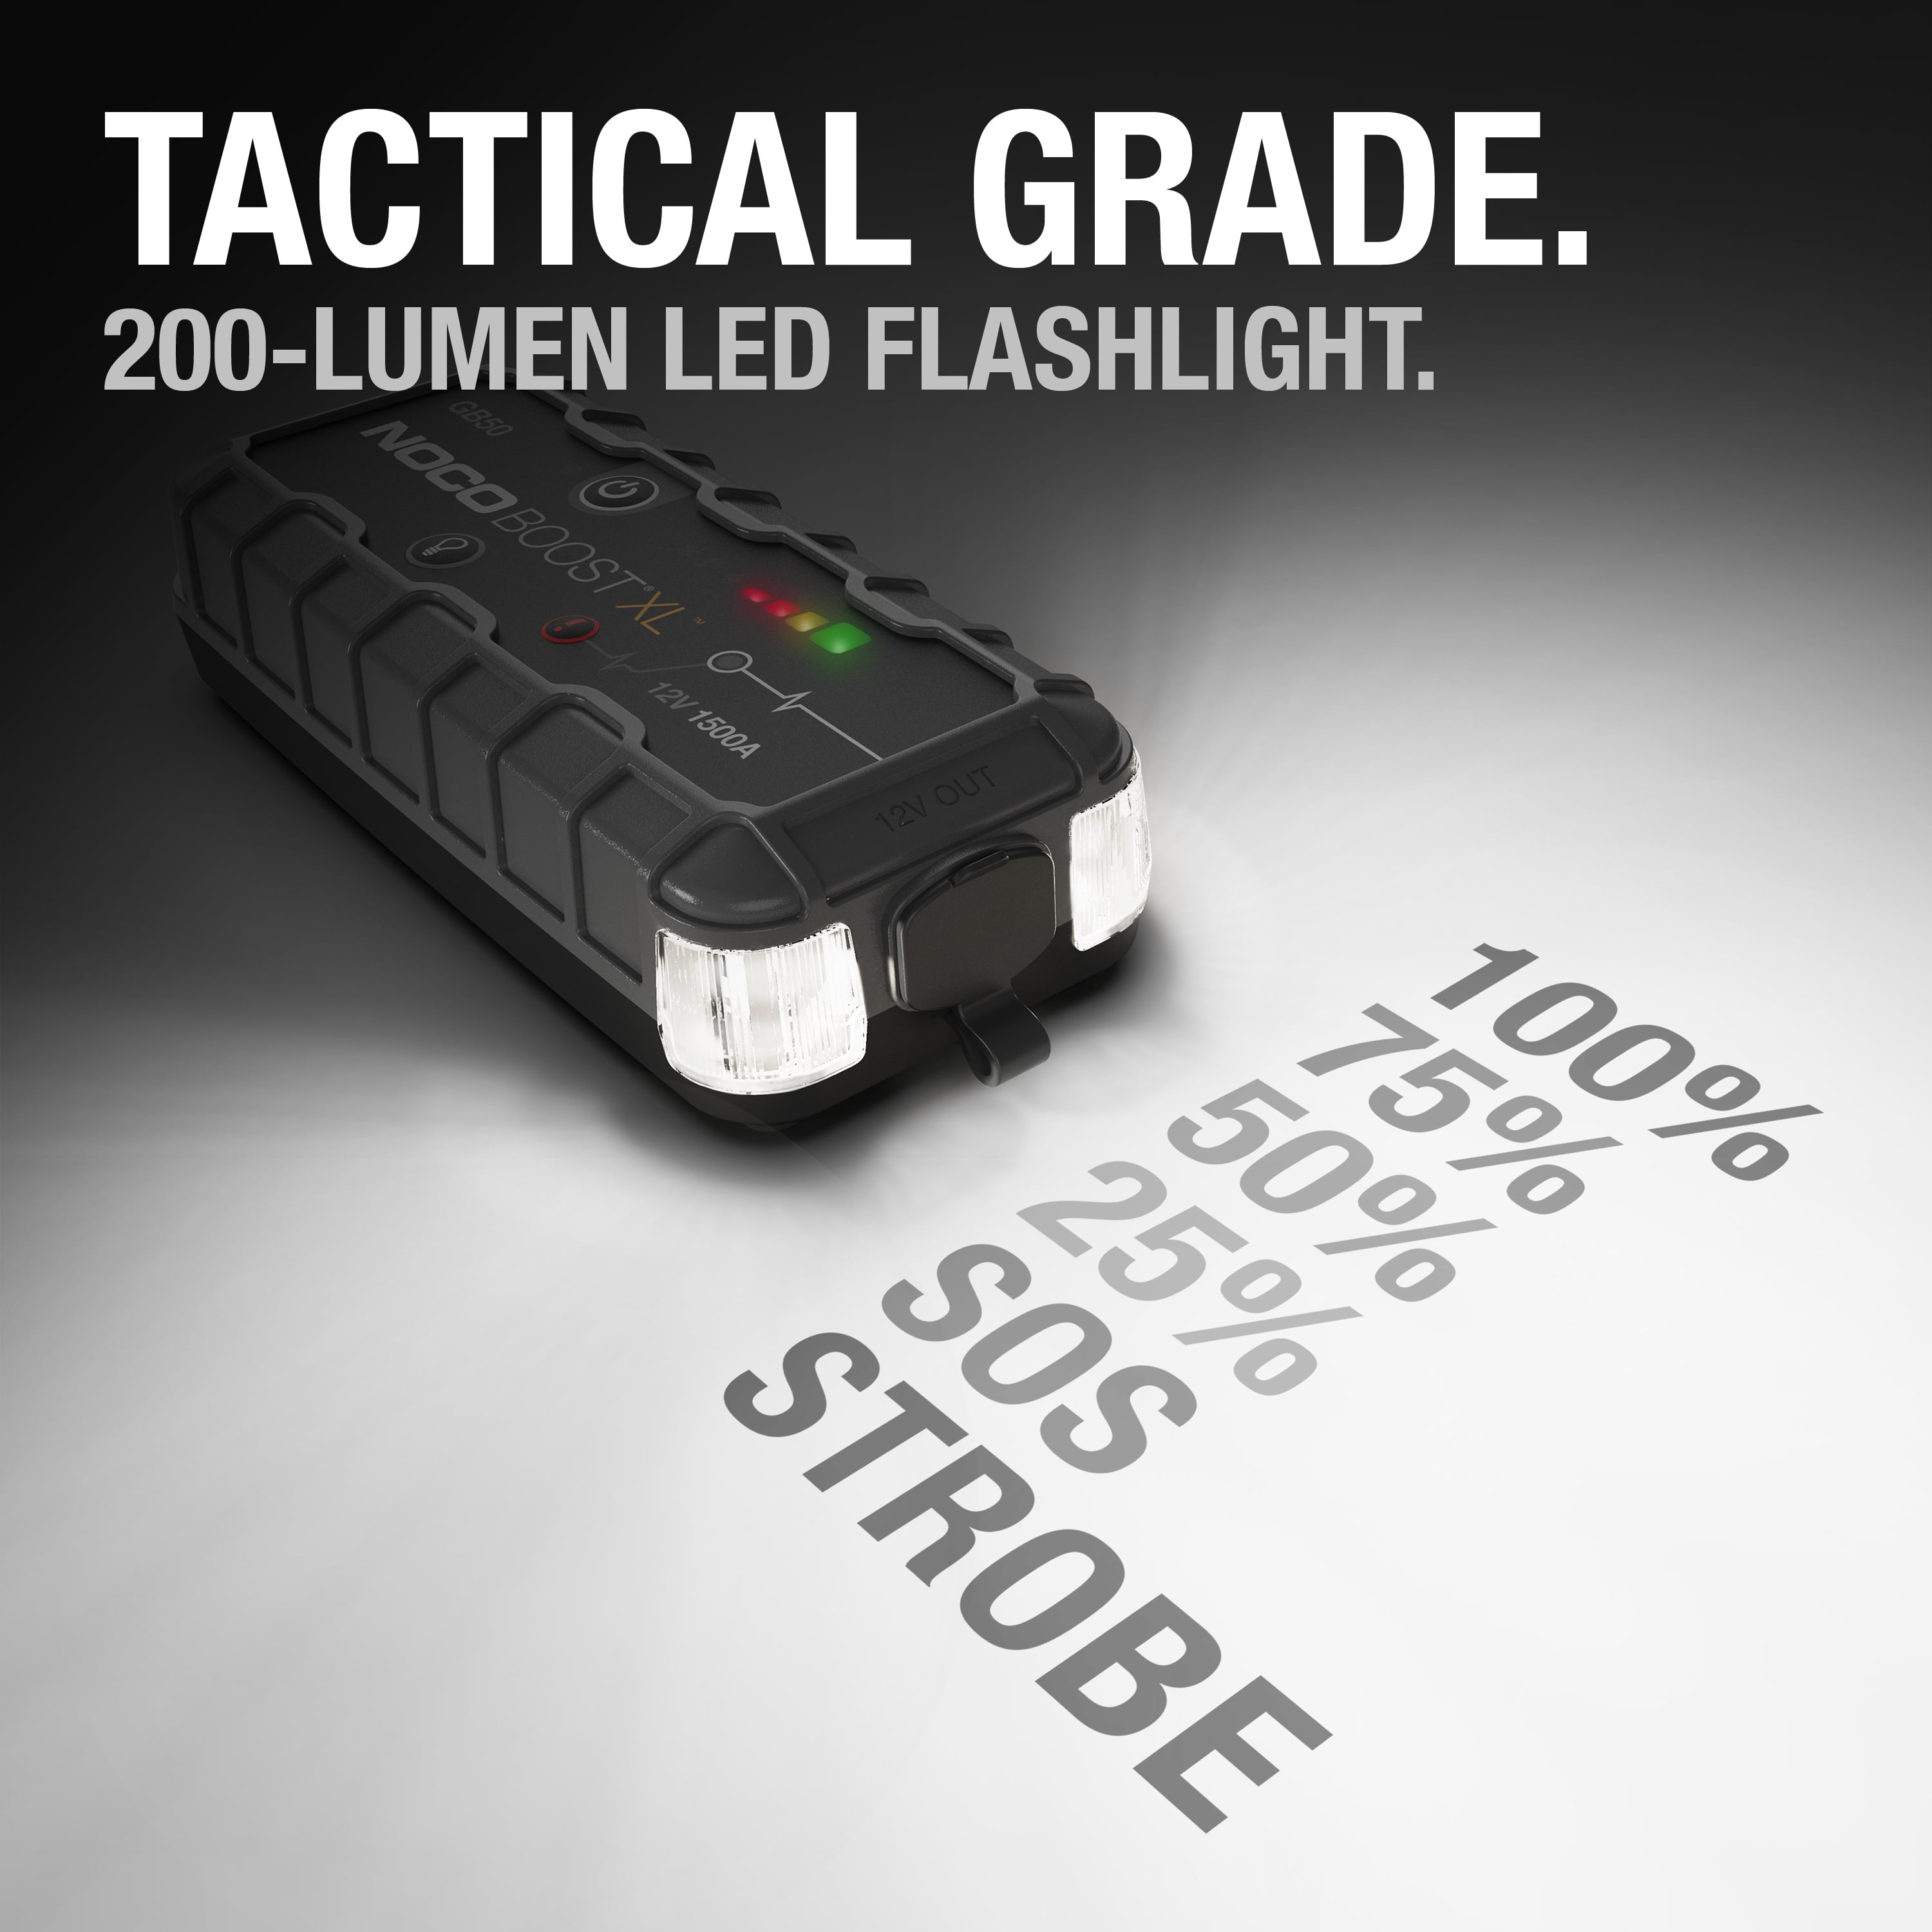 NOCO Boost XL GB50 1500A 12V UltraSafe Portable Lithium Jump Starter 